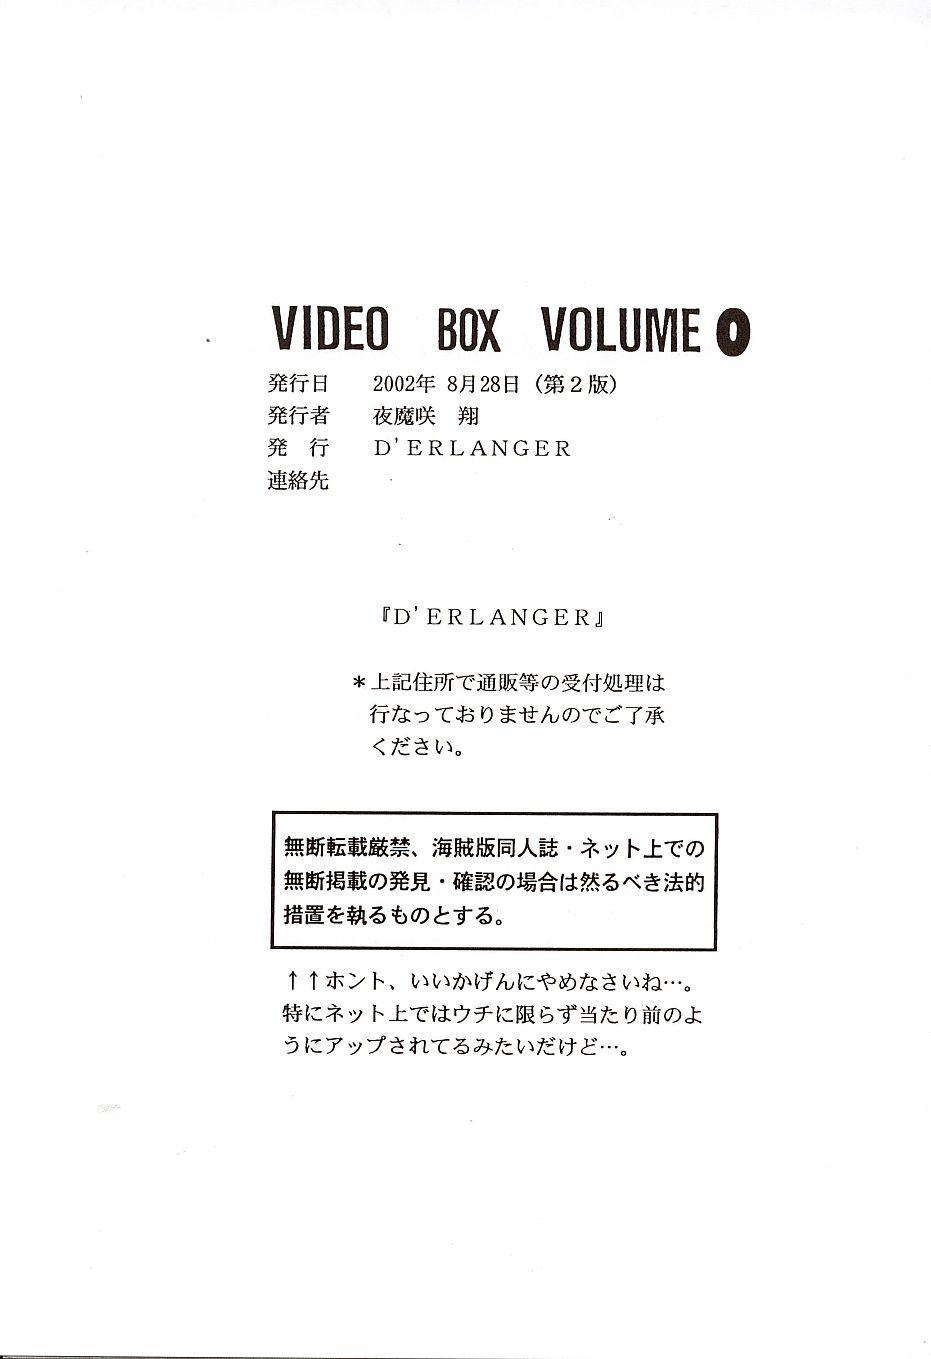 Denkagekou VIDEO BOX VOLUME 0 20